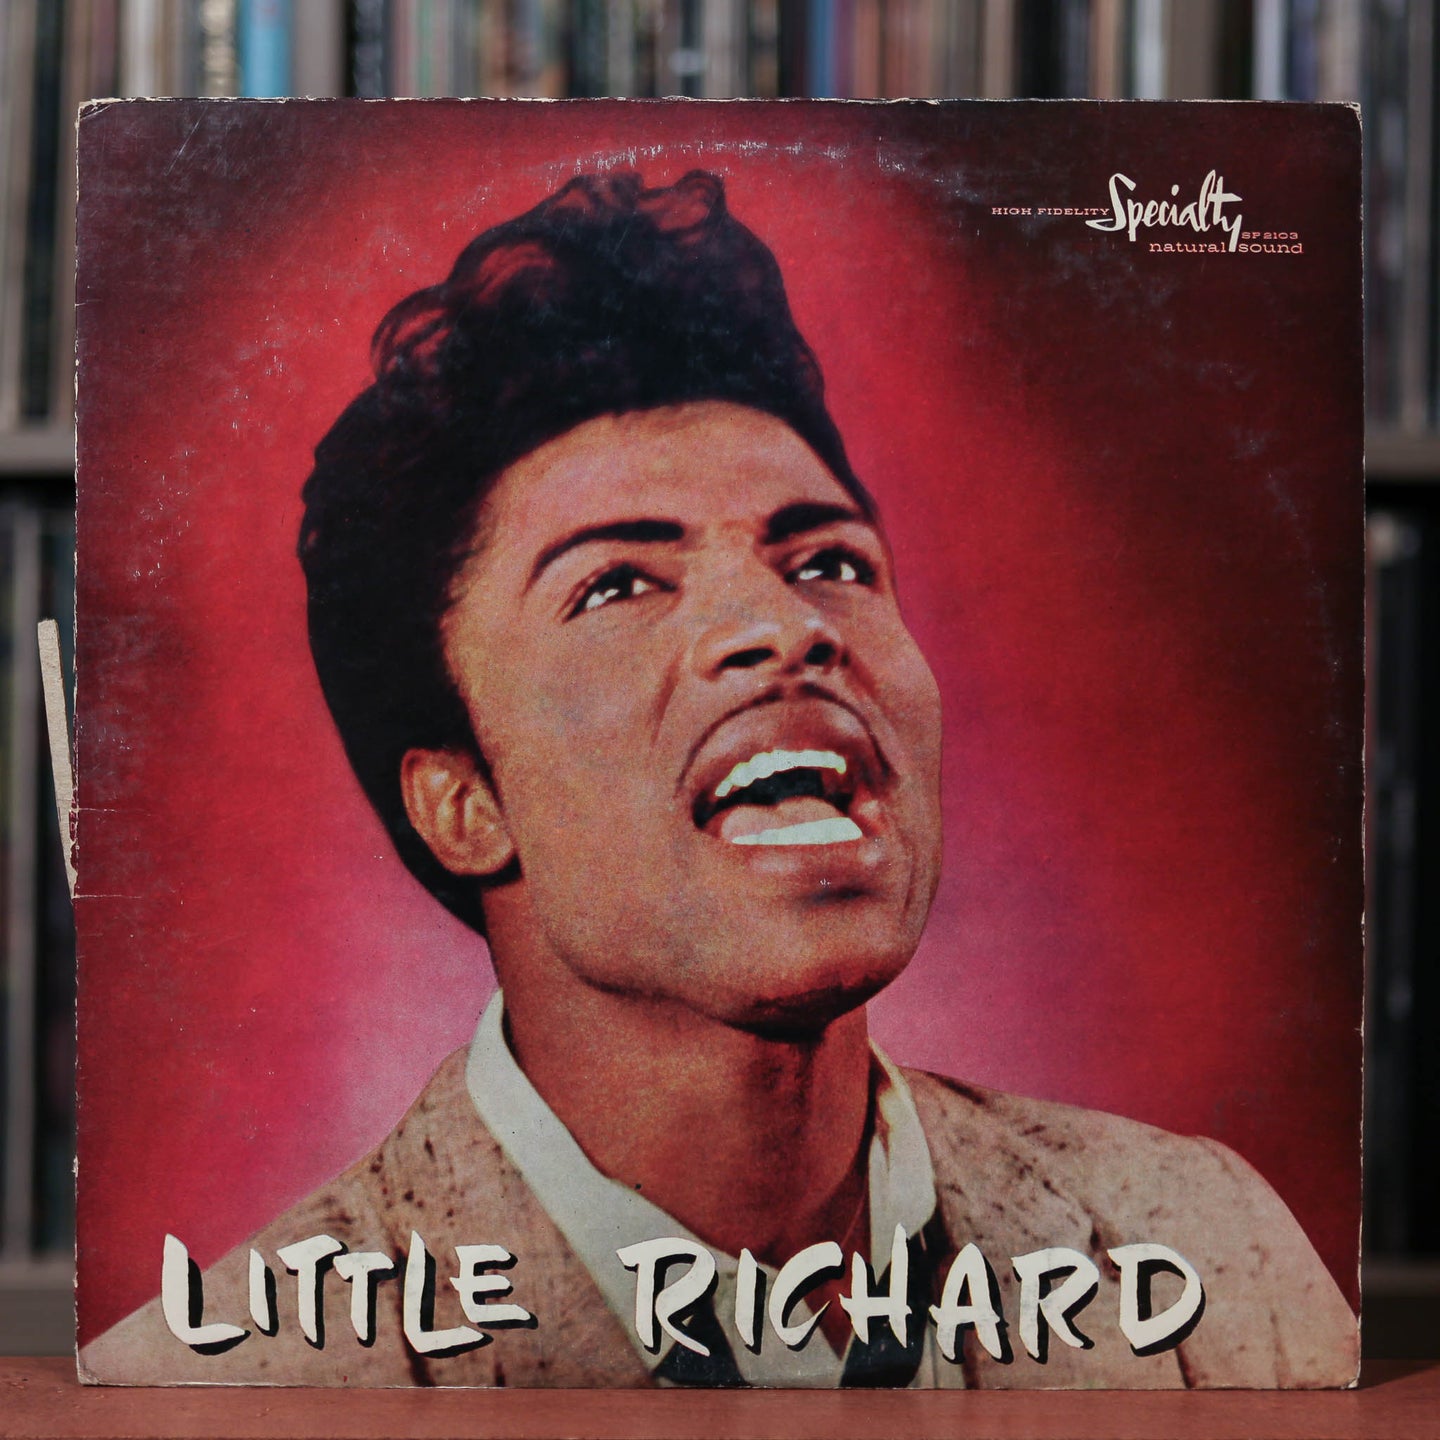 Little Richard - Self-Titled - 1958 Specialty, VG/VG